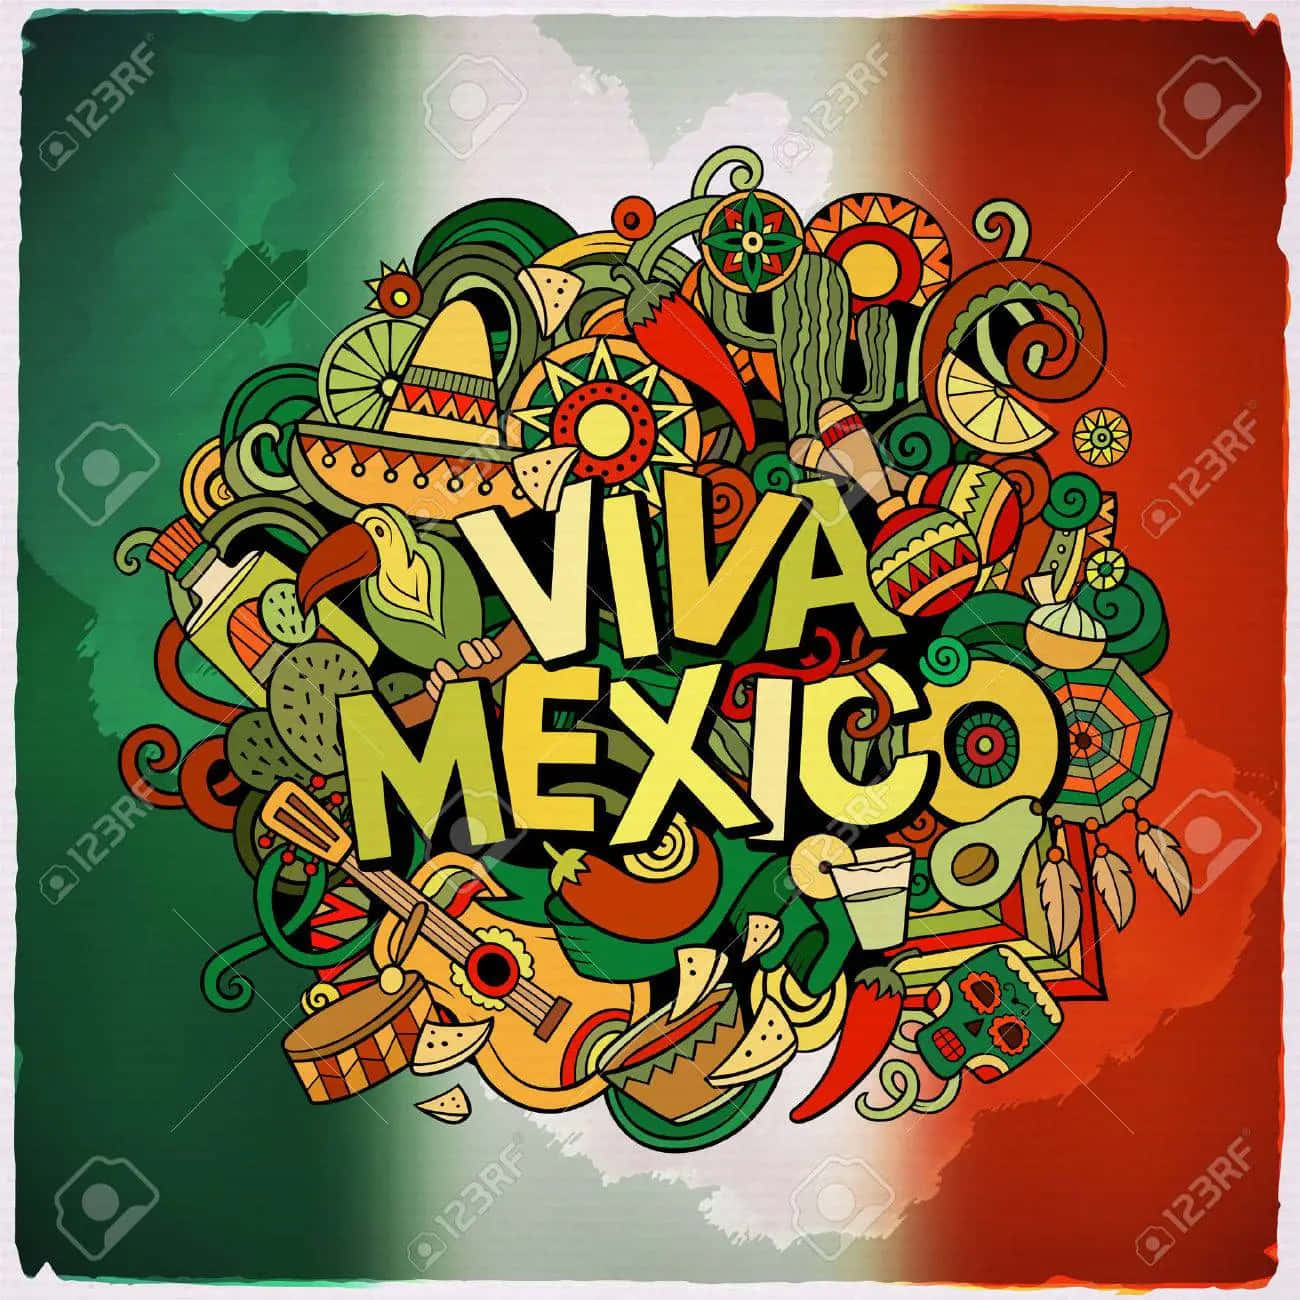 Celebrate Viva Mexico! Wallpaper